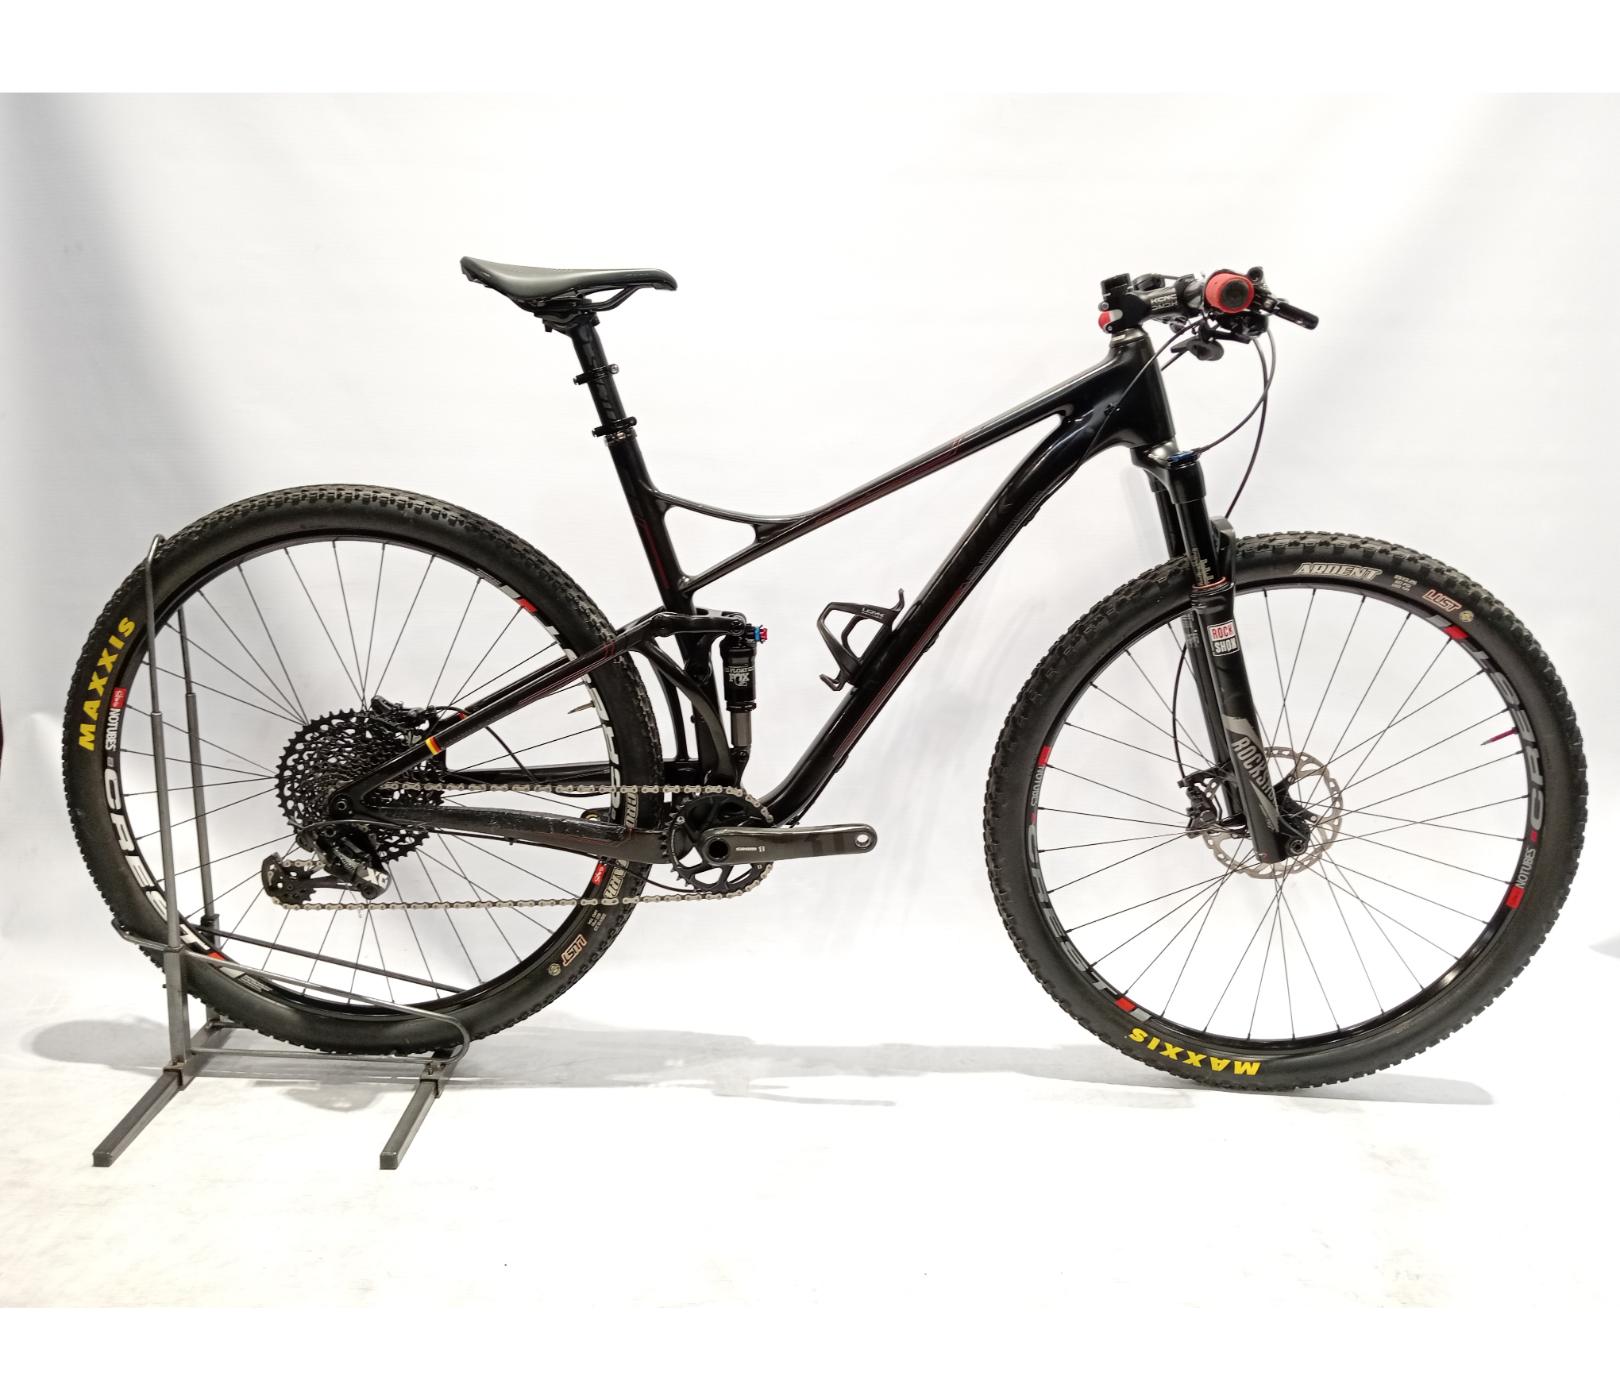 Pre-Owned Silverback Sesta Pro Carbon Dual Suspension Mountain Bike - Large